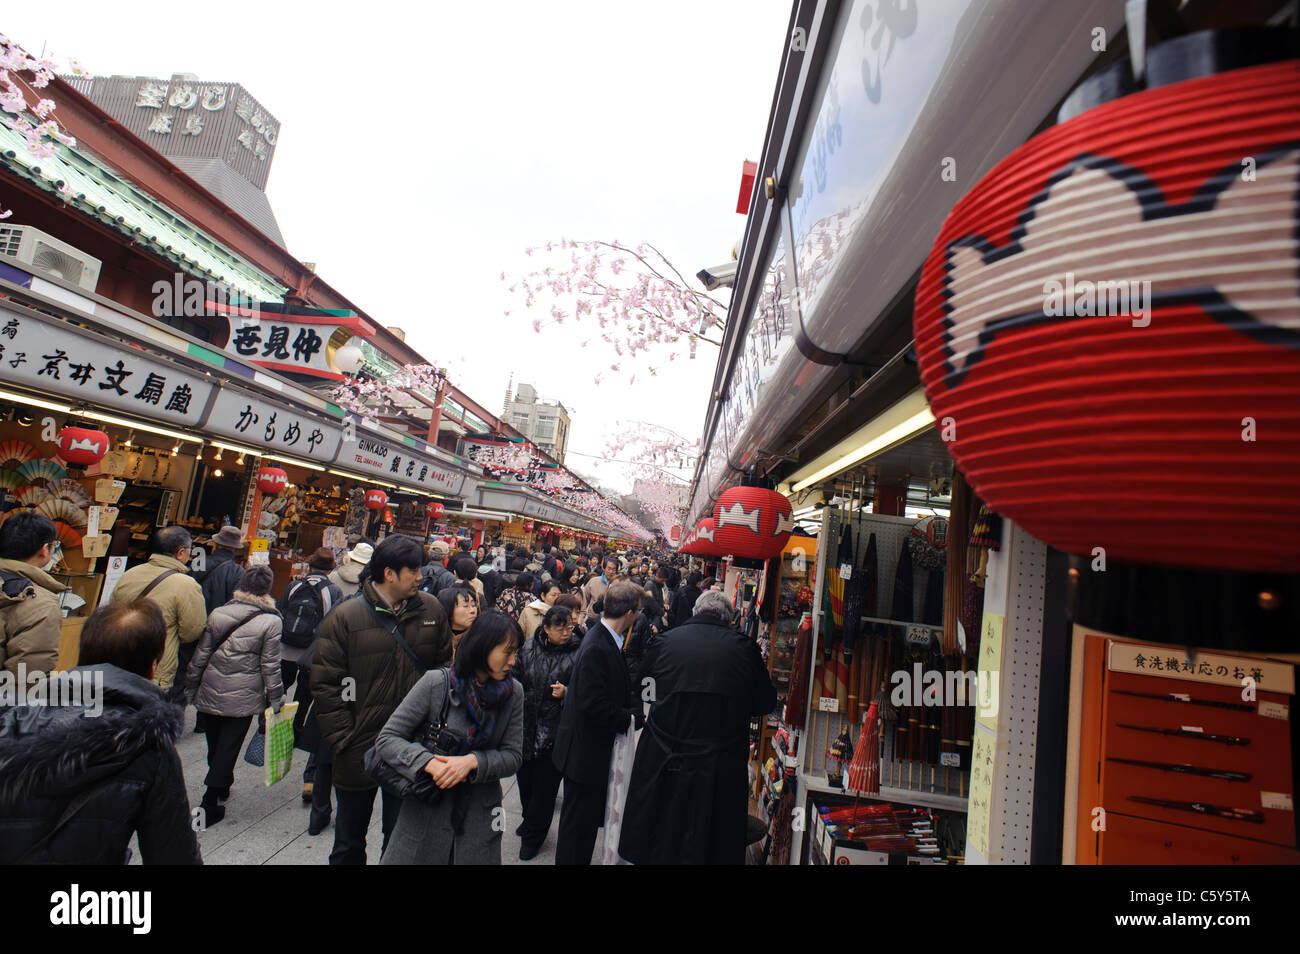 Crowd of people walking through shops in the arcade leading up to Sensoji temple, Asakusa, Tokyo, Japan Stock Photo